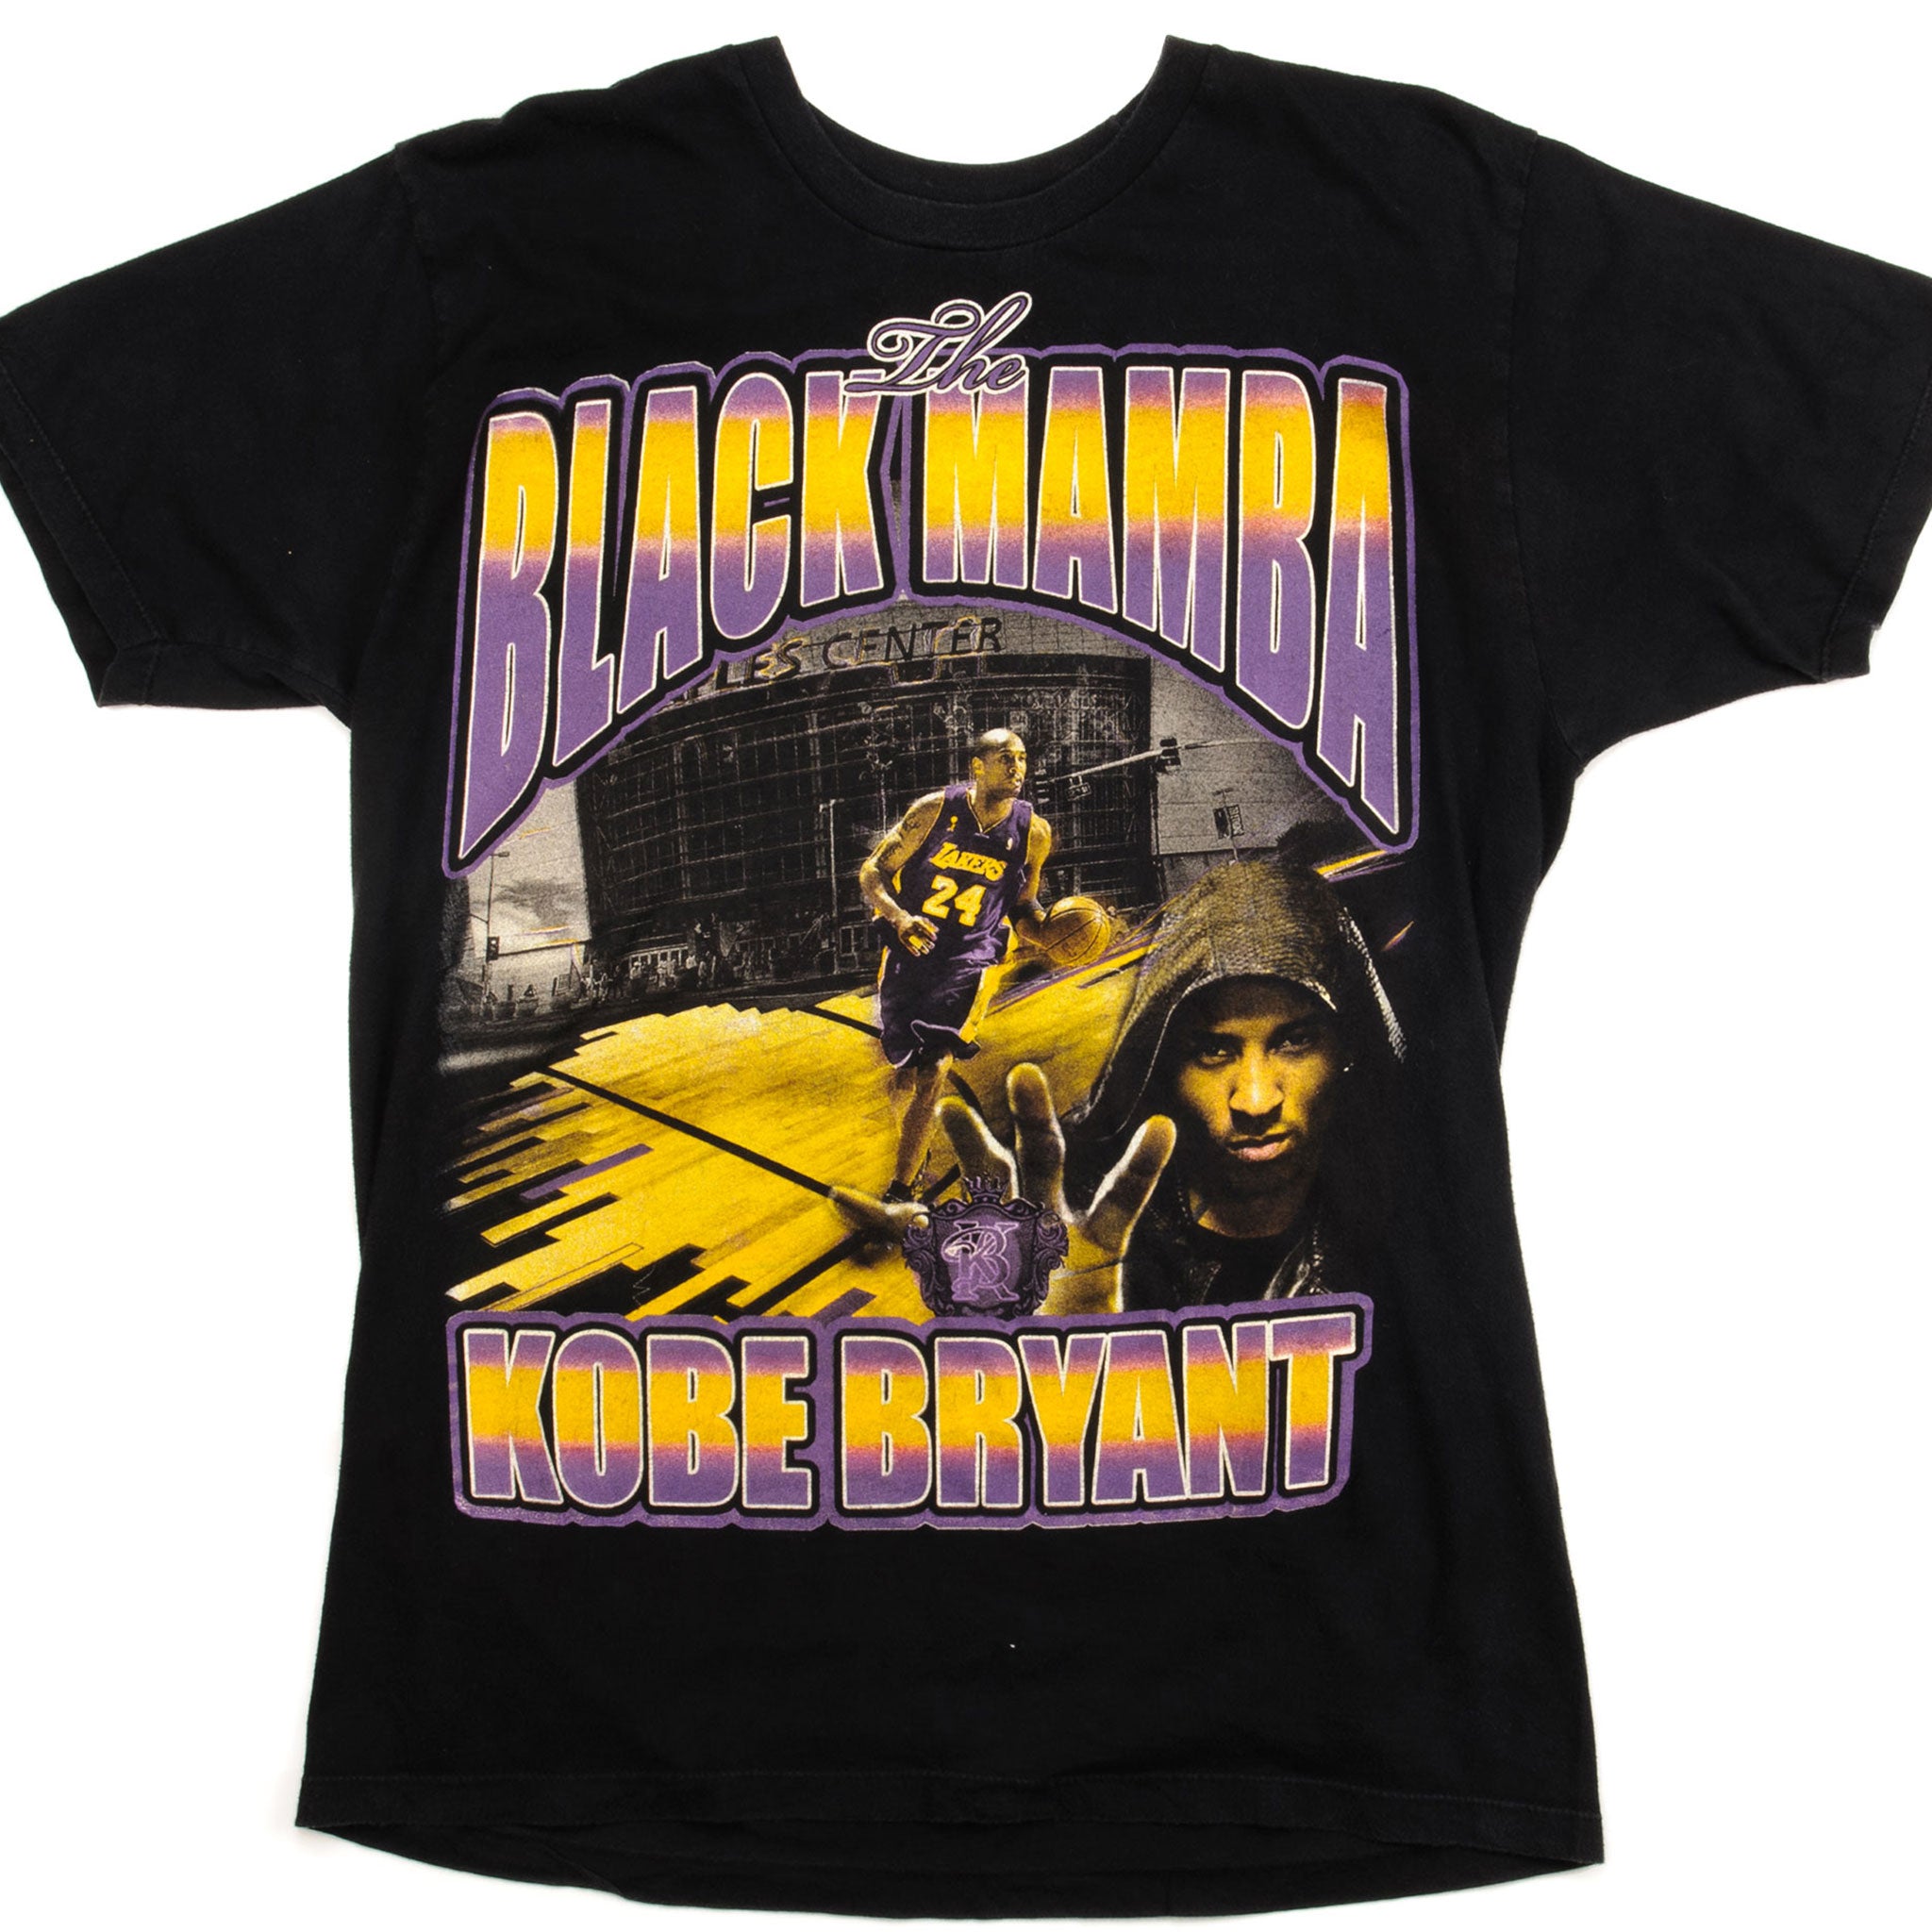 Kobe Bryant T-Shirts for Sale